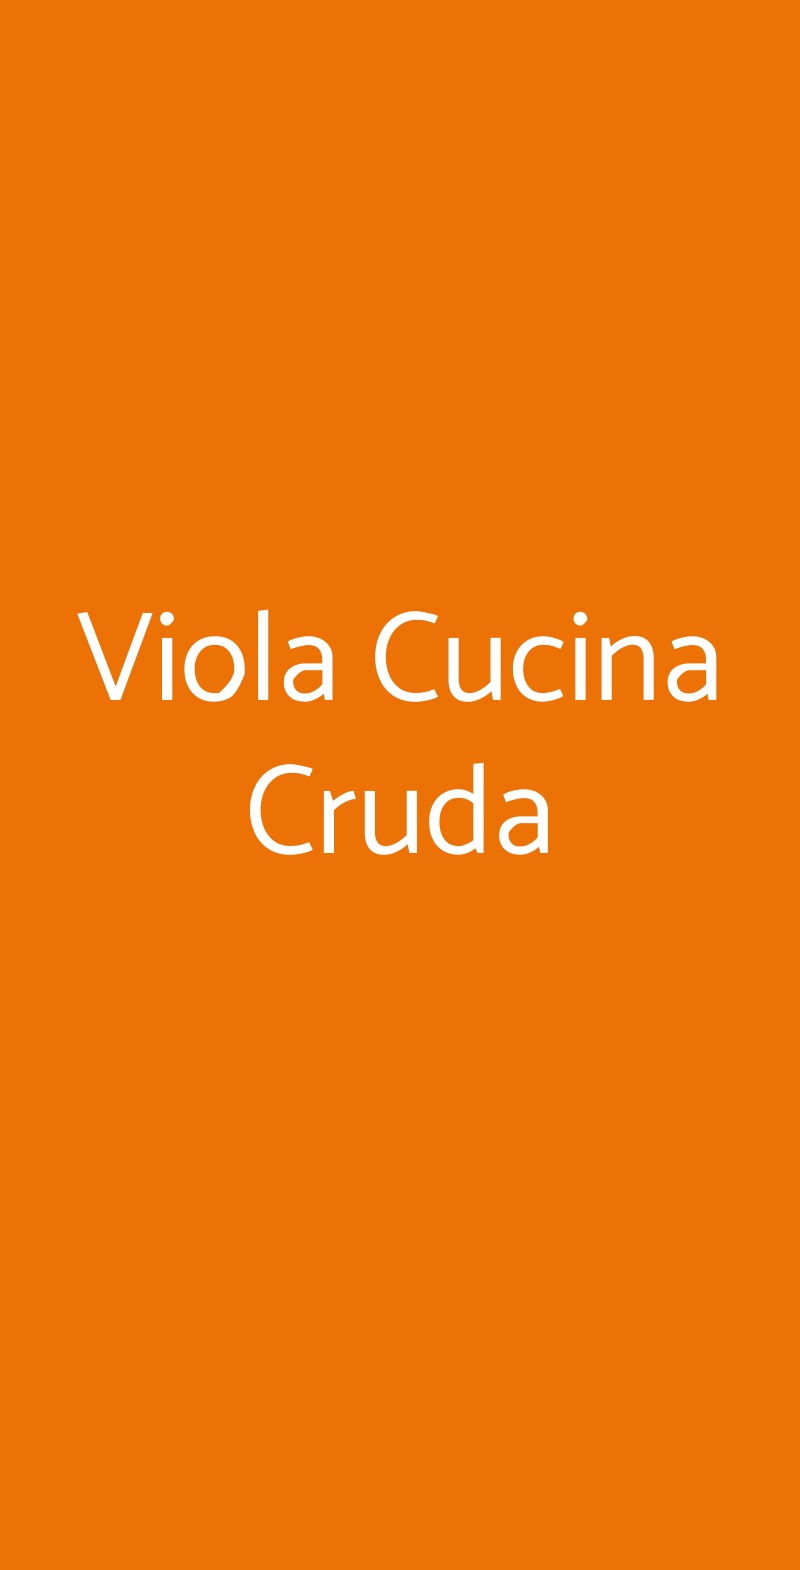 Viola Cucina Cruda Roma menù 1 pagina